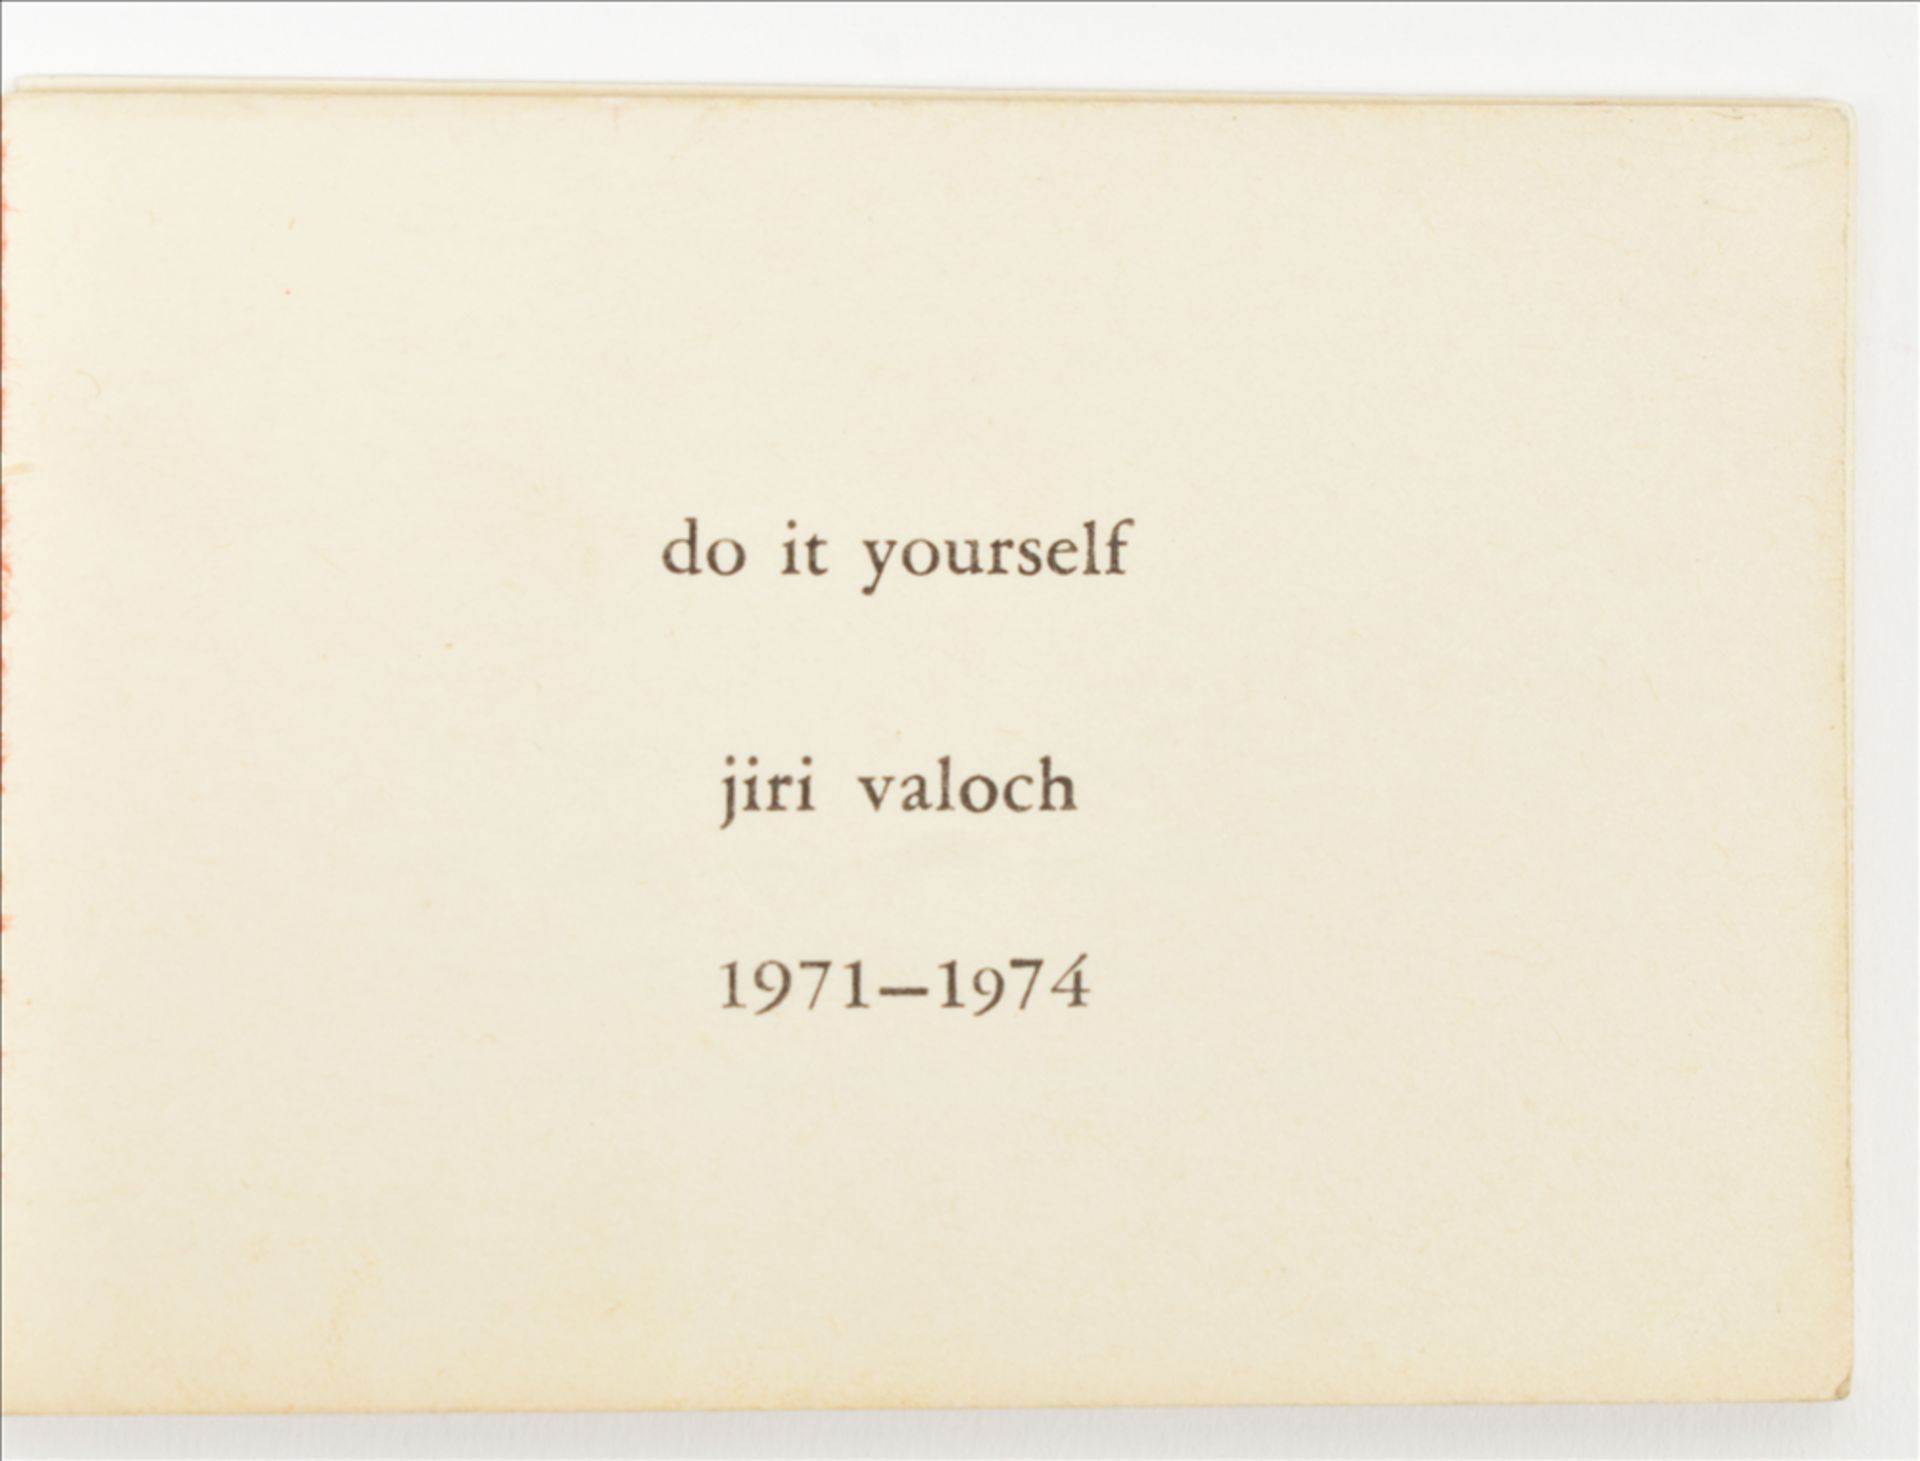 Jiri Valoch, Do it yourself, 1971-1974 - Image 3 of 5